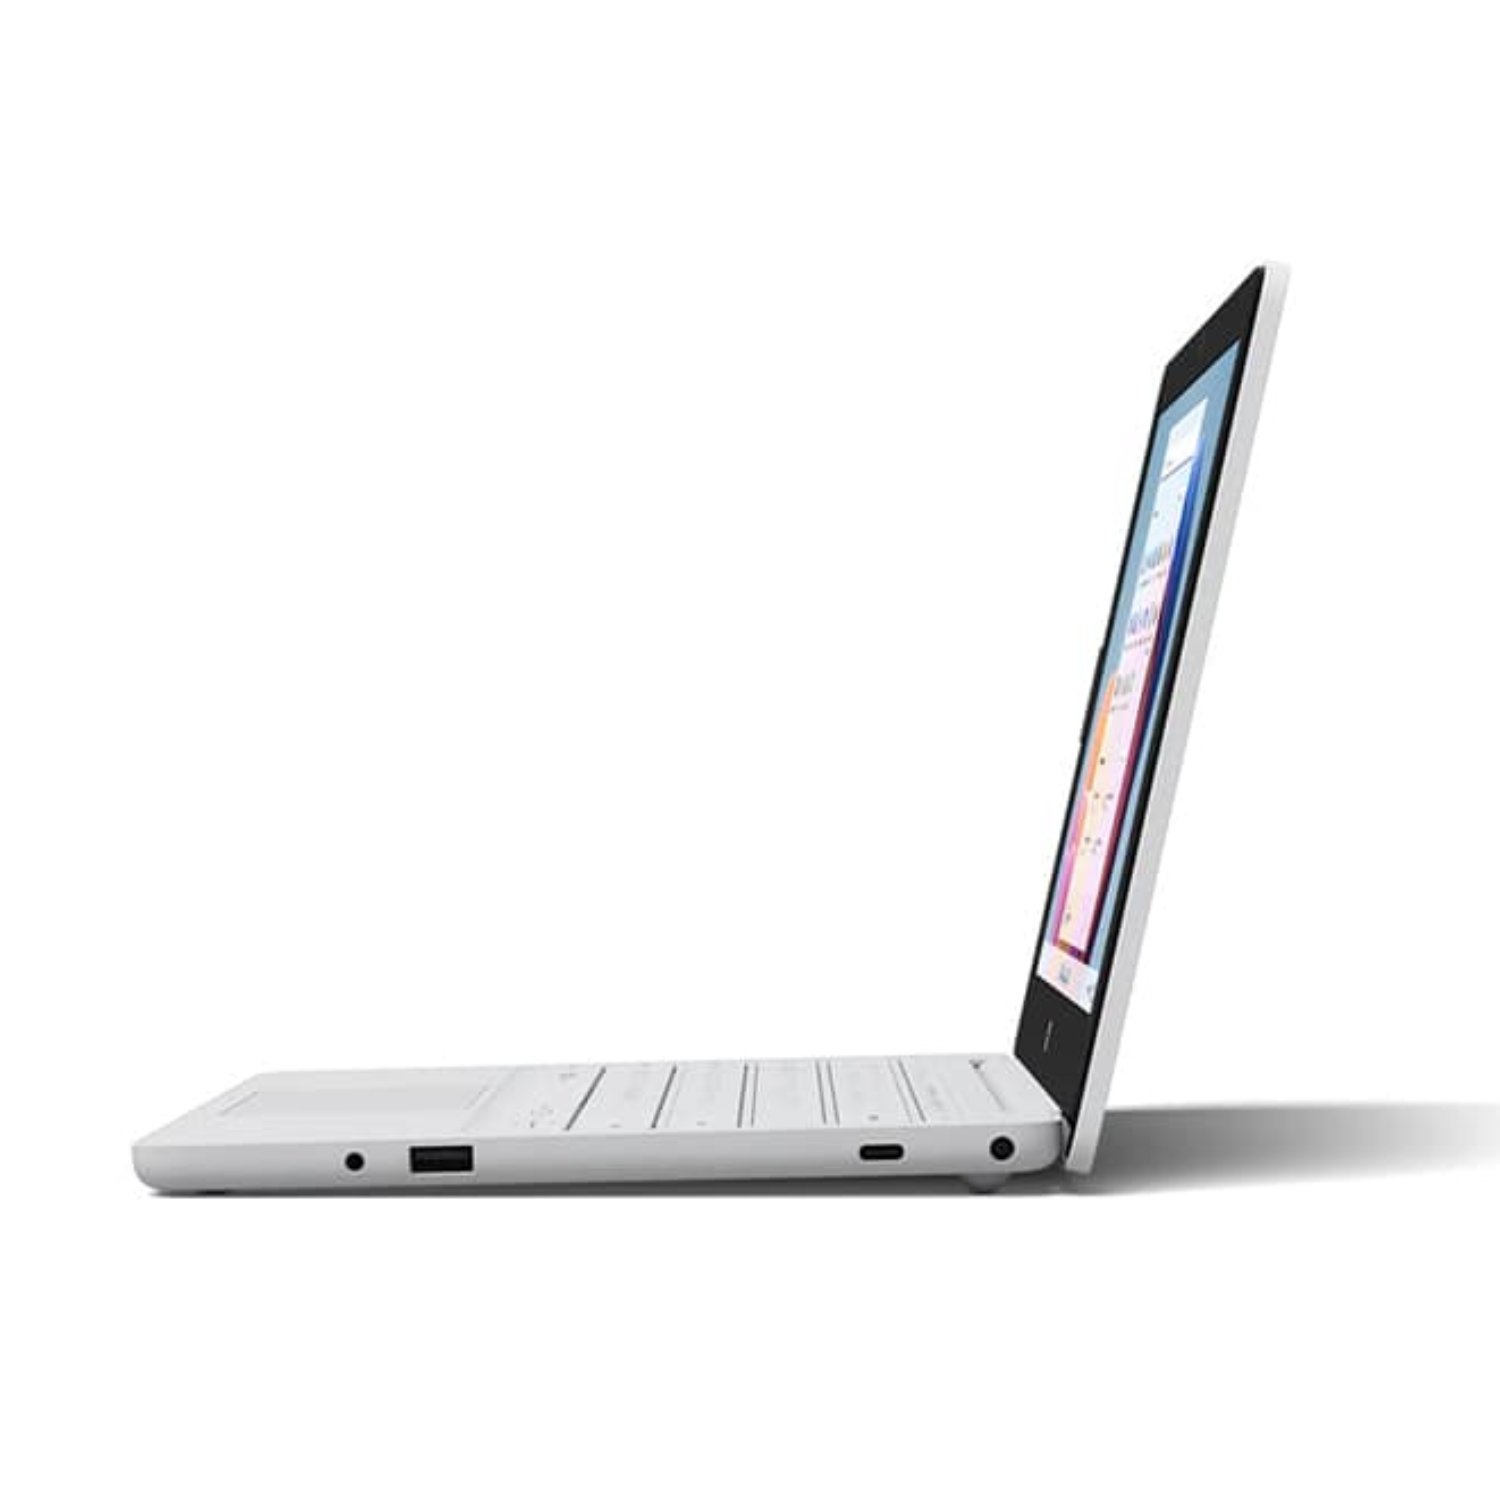 سرفیس لپ تاپ SE مایکروسافت 11 اینچ  Celeron N4020-8G-64G  